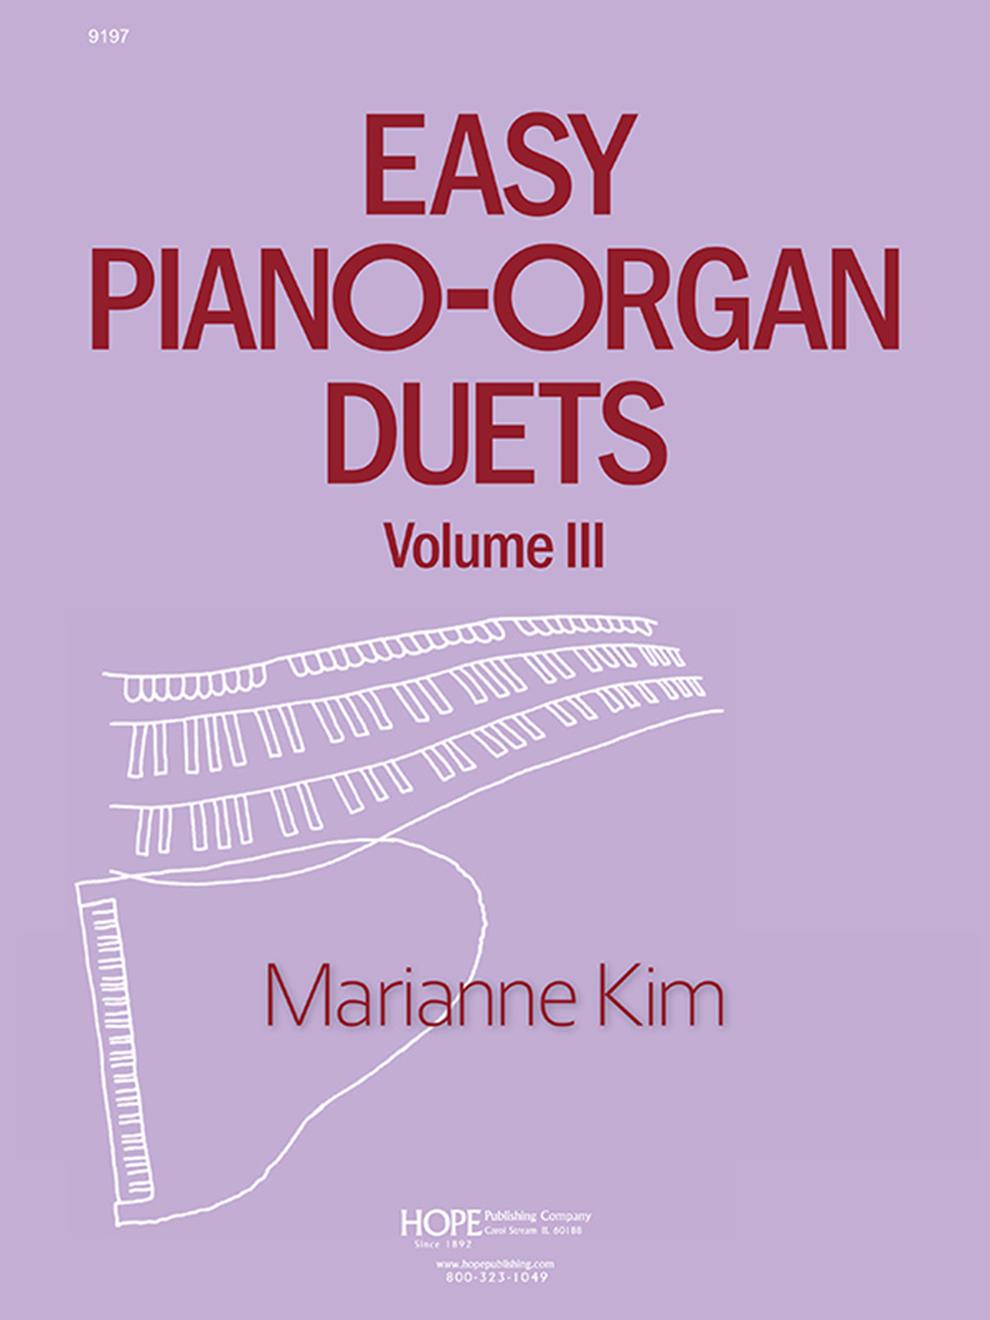 Easy Piano-Organ Duets III Cover Image